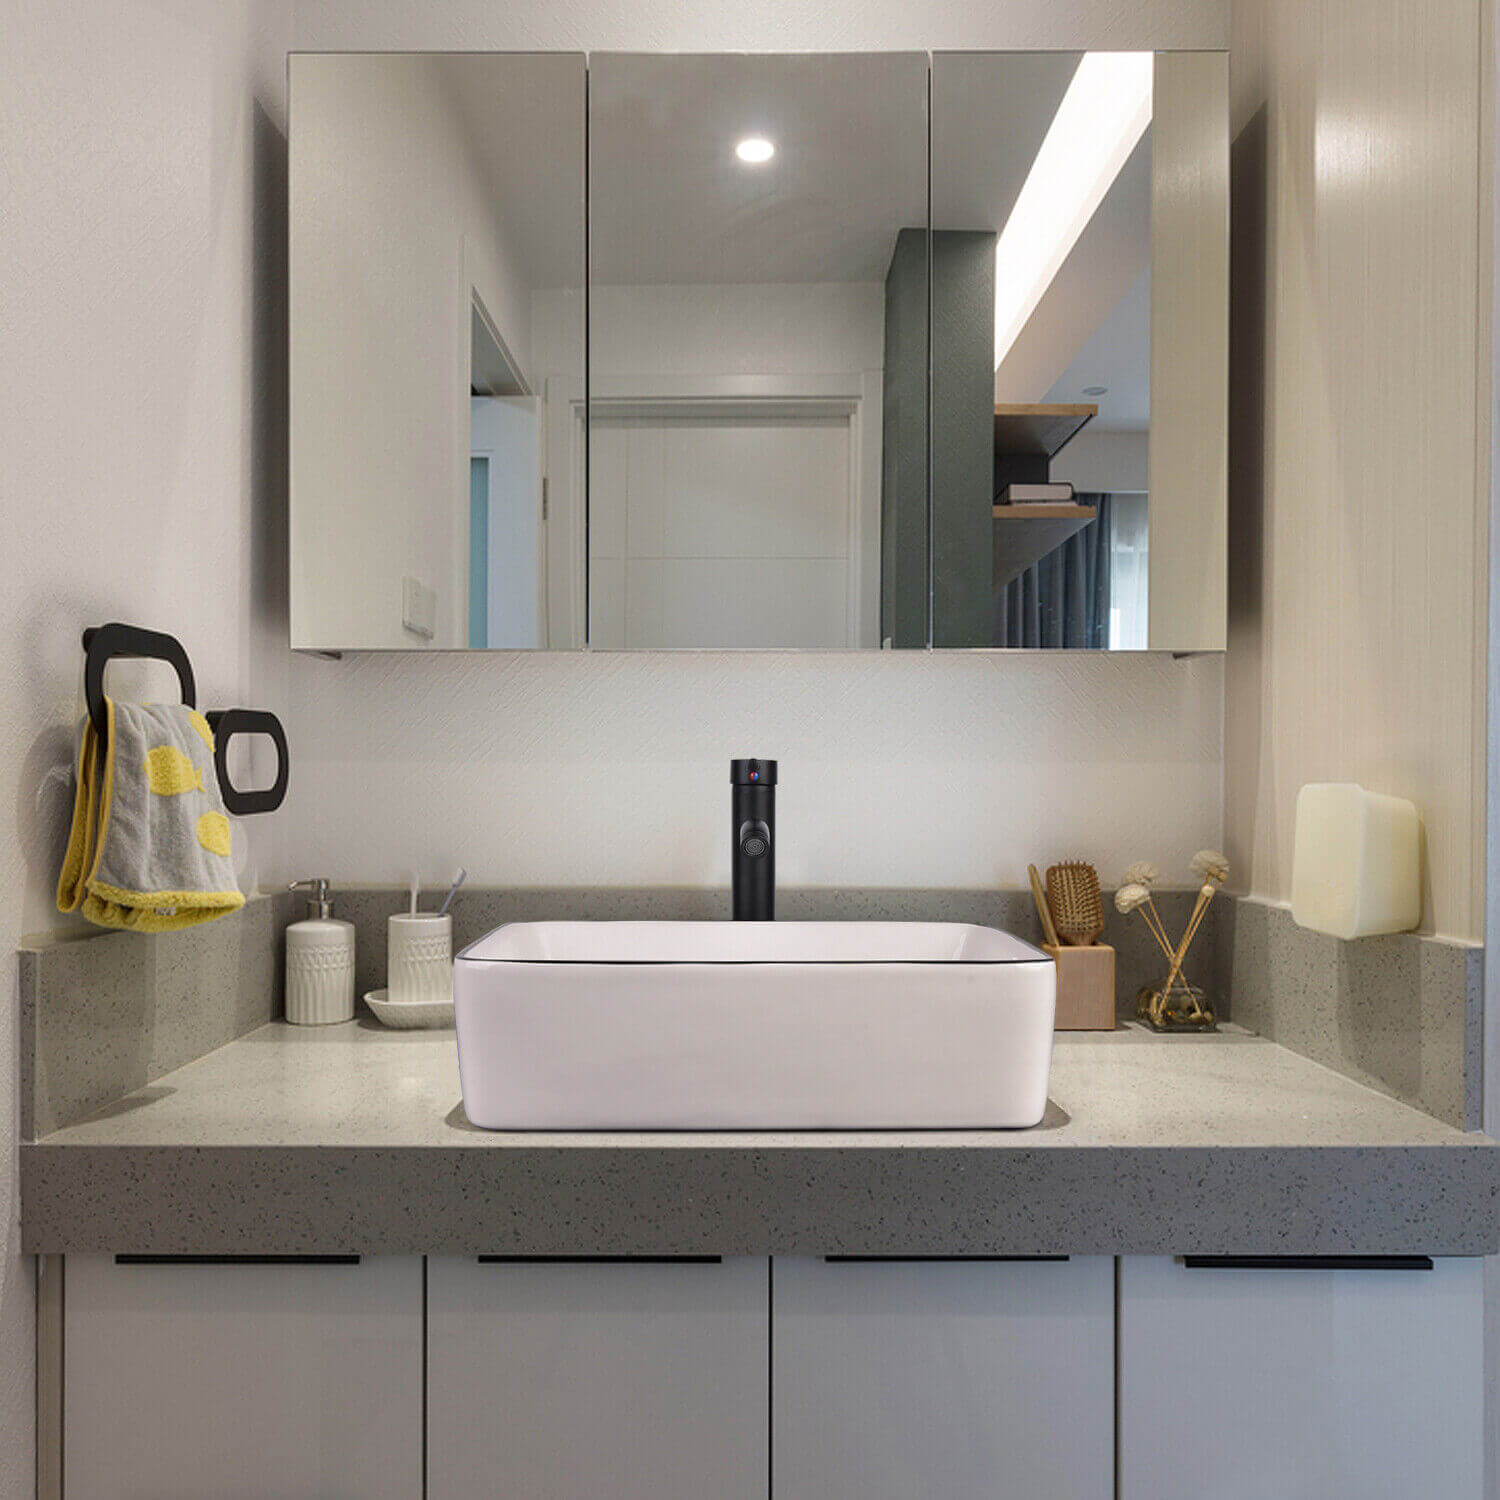 Elecwish rectangular ceramic vessel sink bathroom display